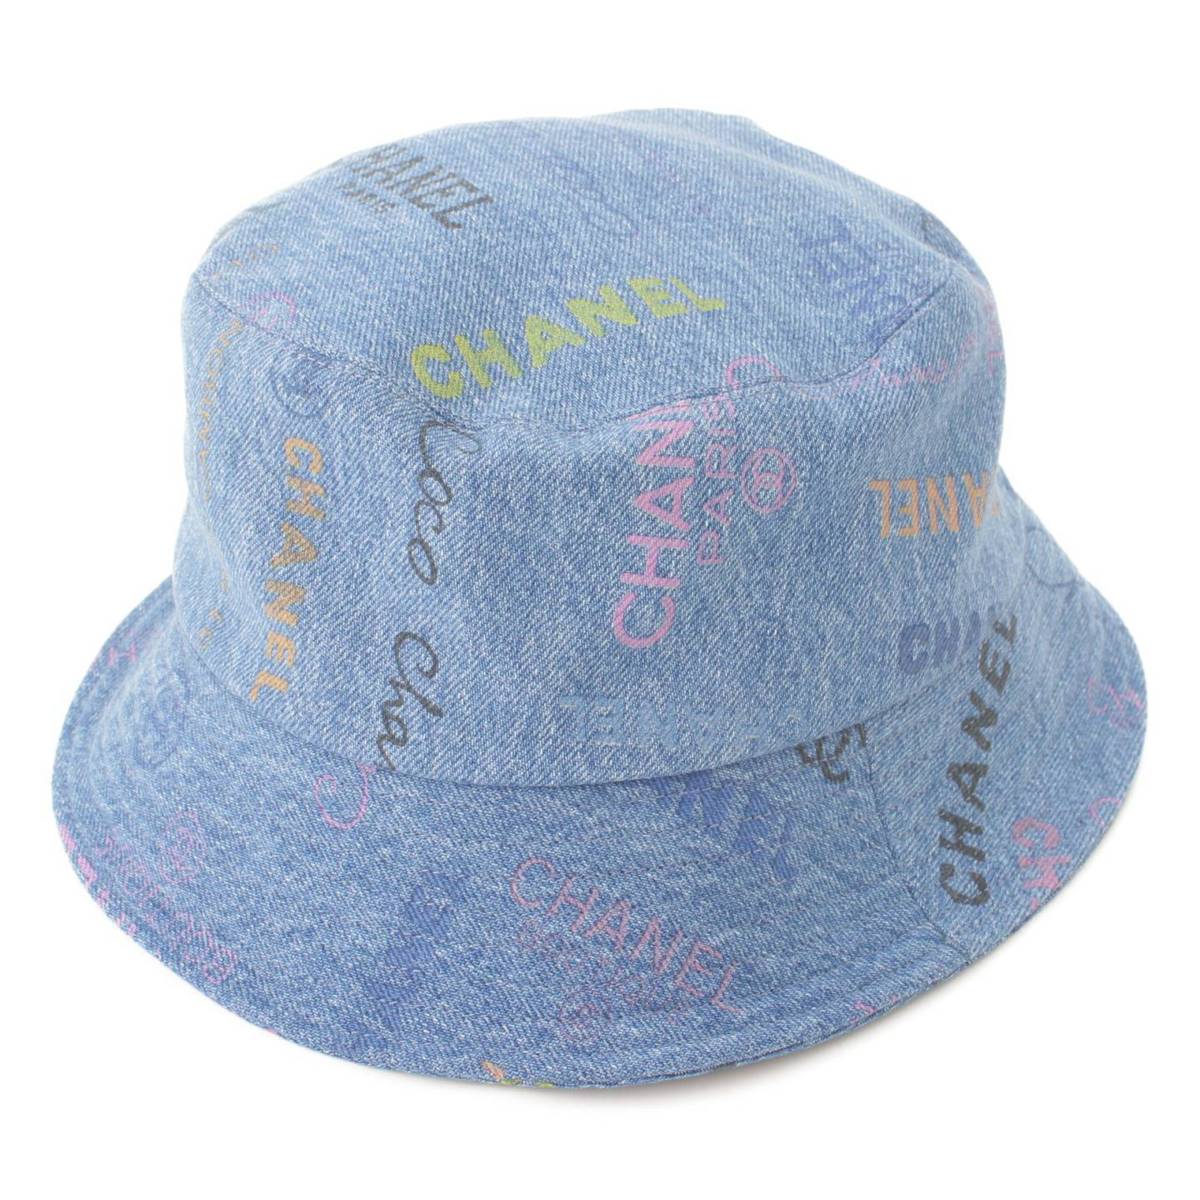 CHANEL シャネル デニム ハット バケットハット 帽子 ココマーク ポケット ストライプ ブルー ゴールド サイズ56 美品  43516